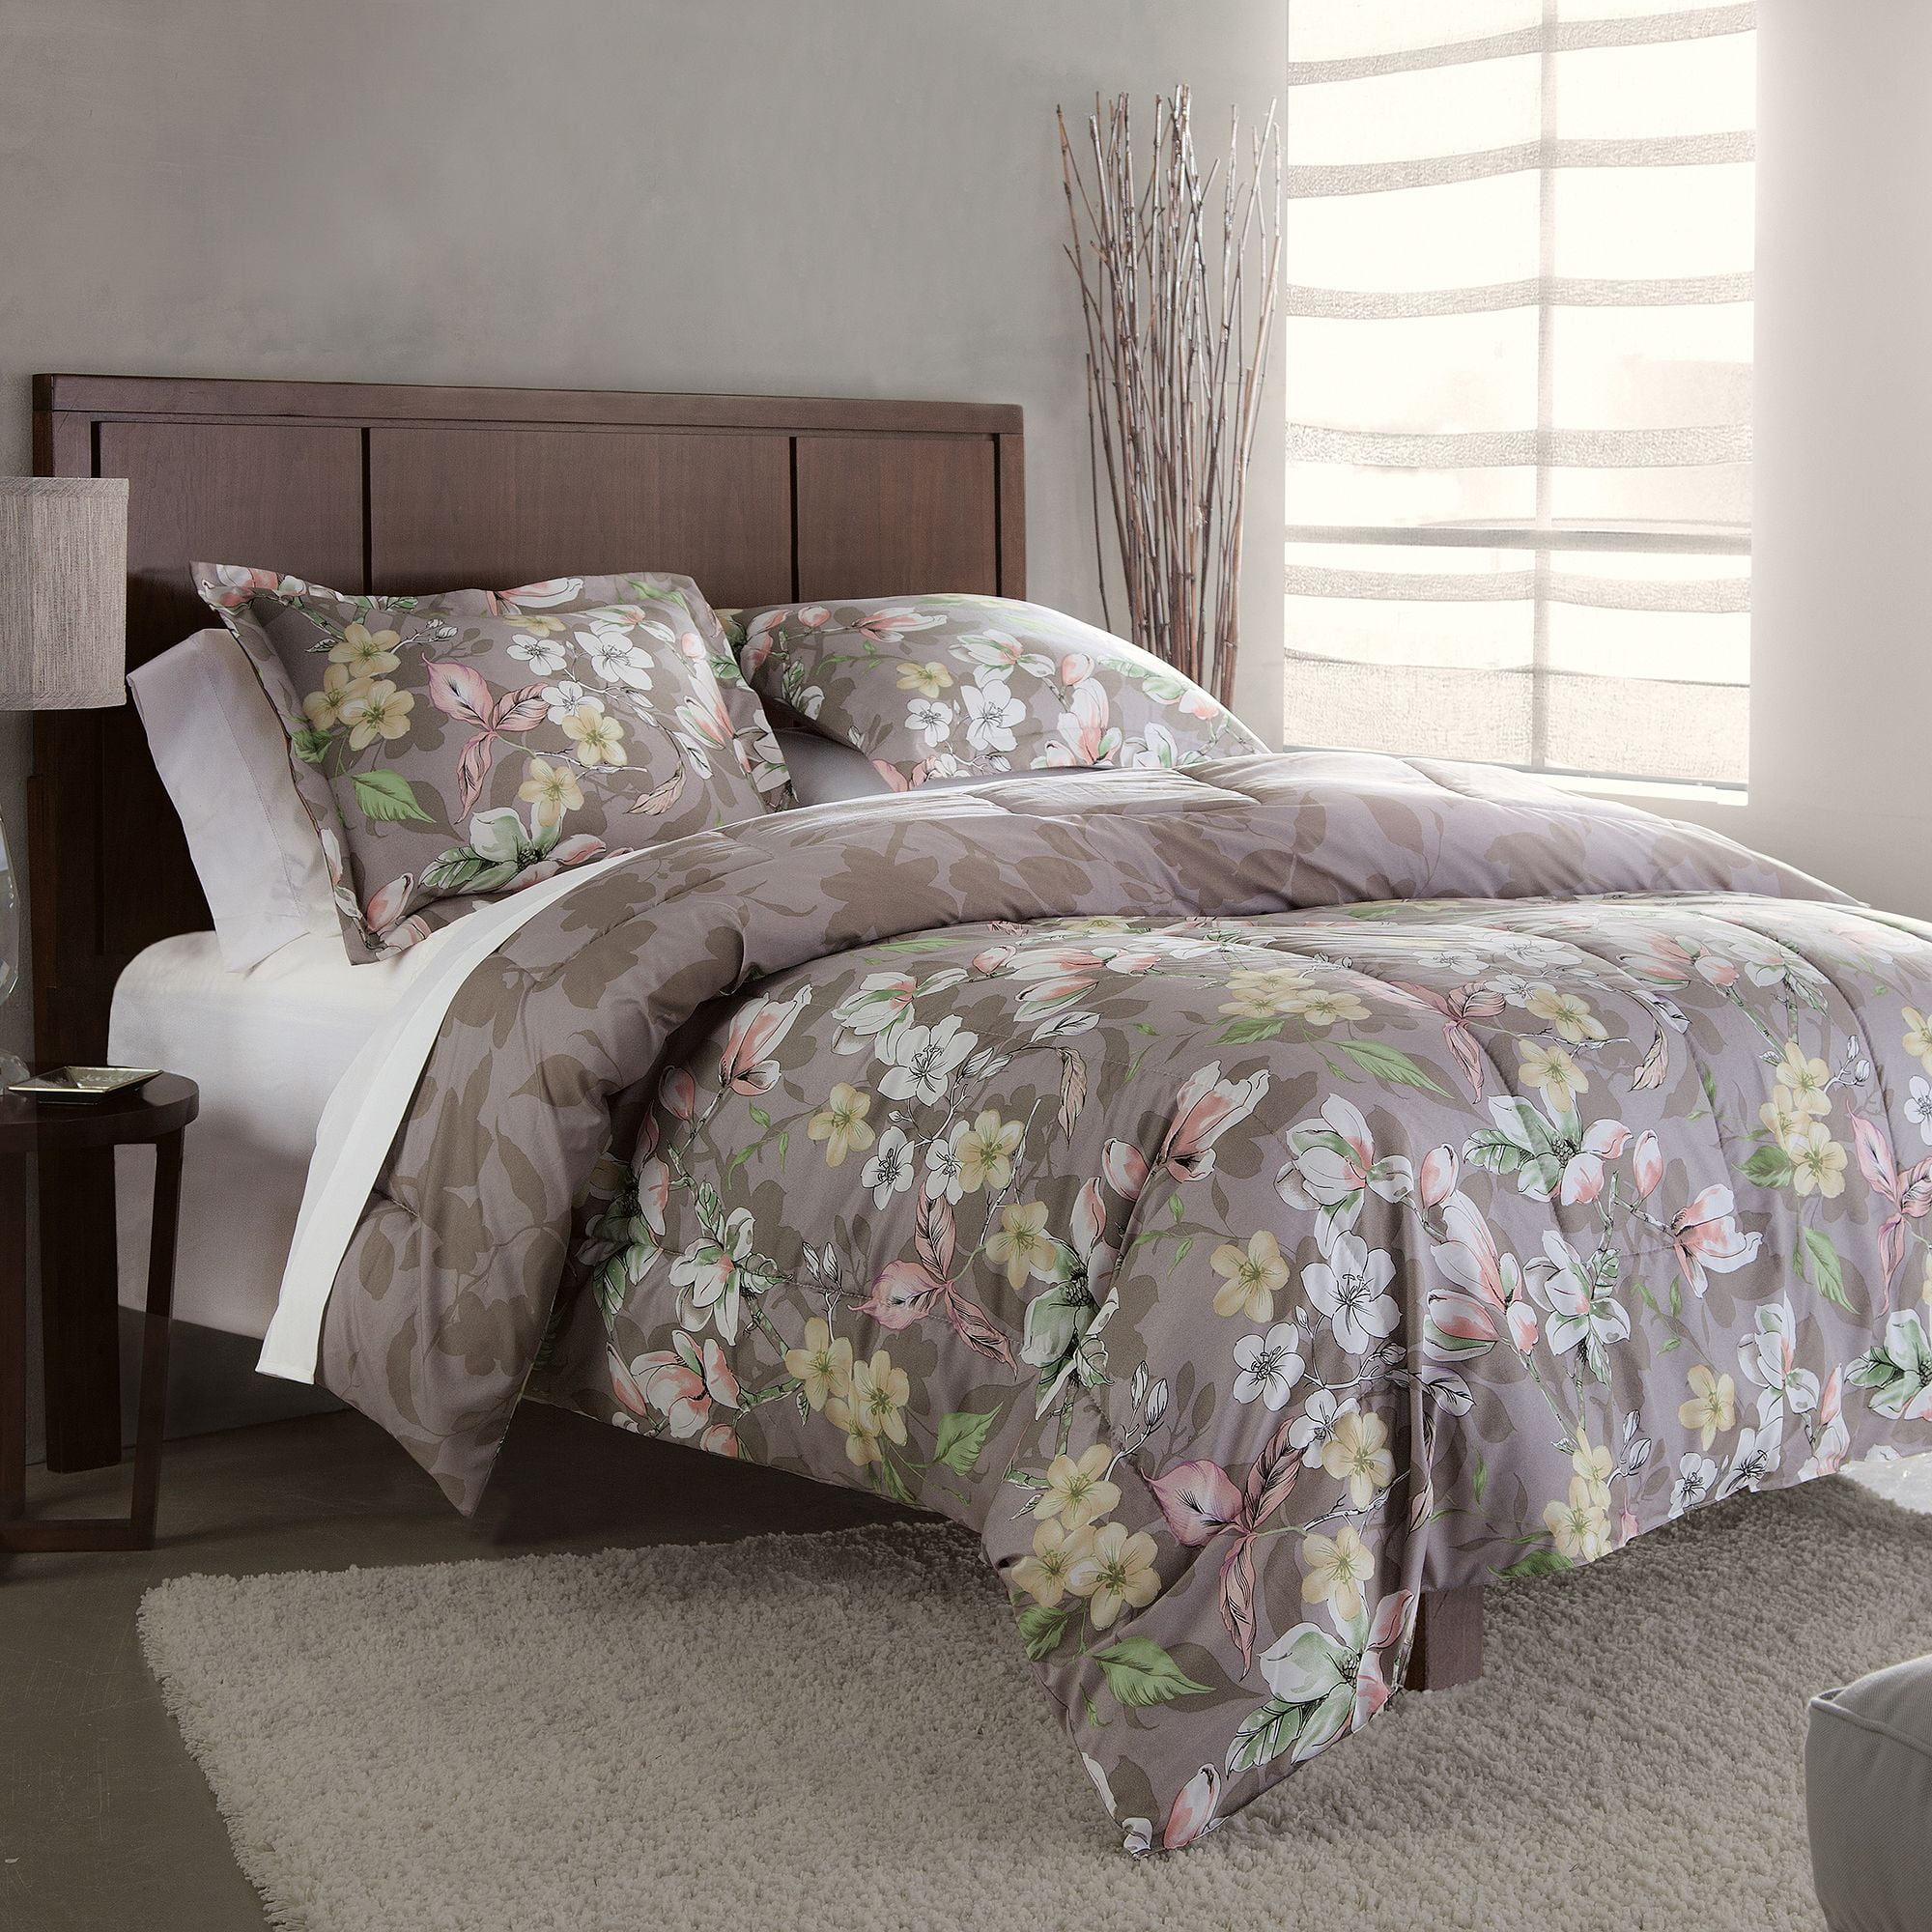 Divatex Home Fashions Natalie Bedding Comforter Set, Gray - Walmart.com